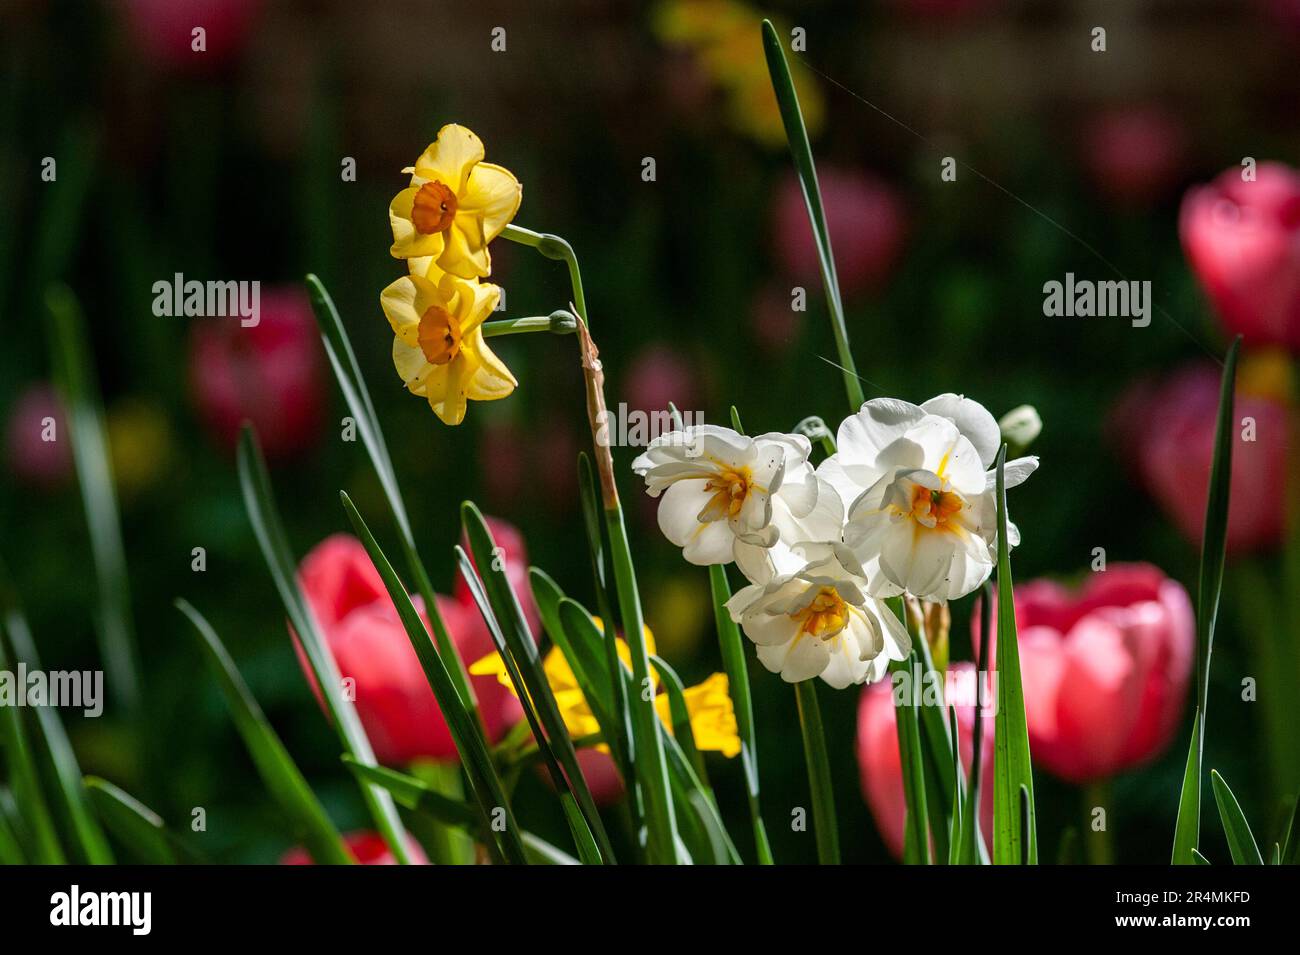 Blumen im Blumenfeld aus der Nähe. Natur, Frühling, Sommer. Stockfoto